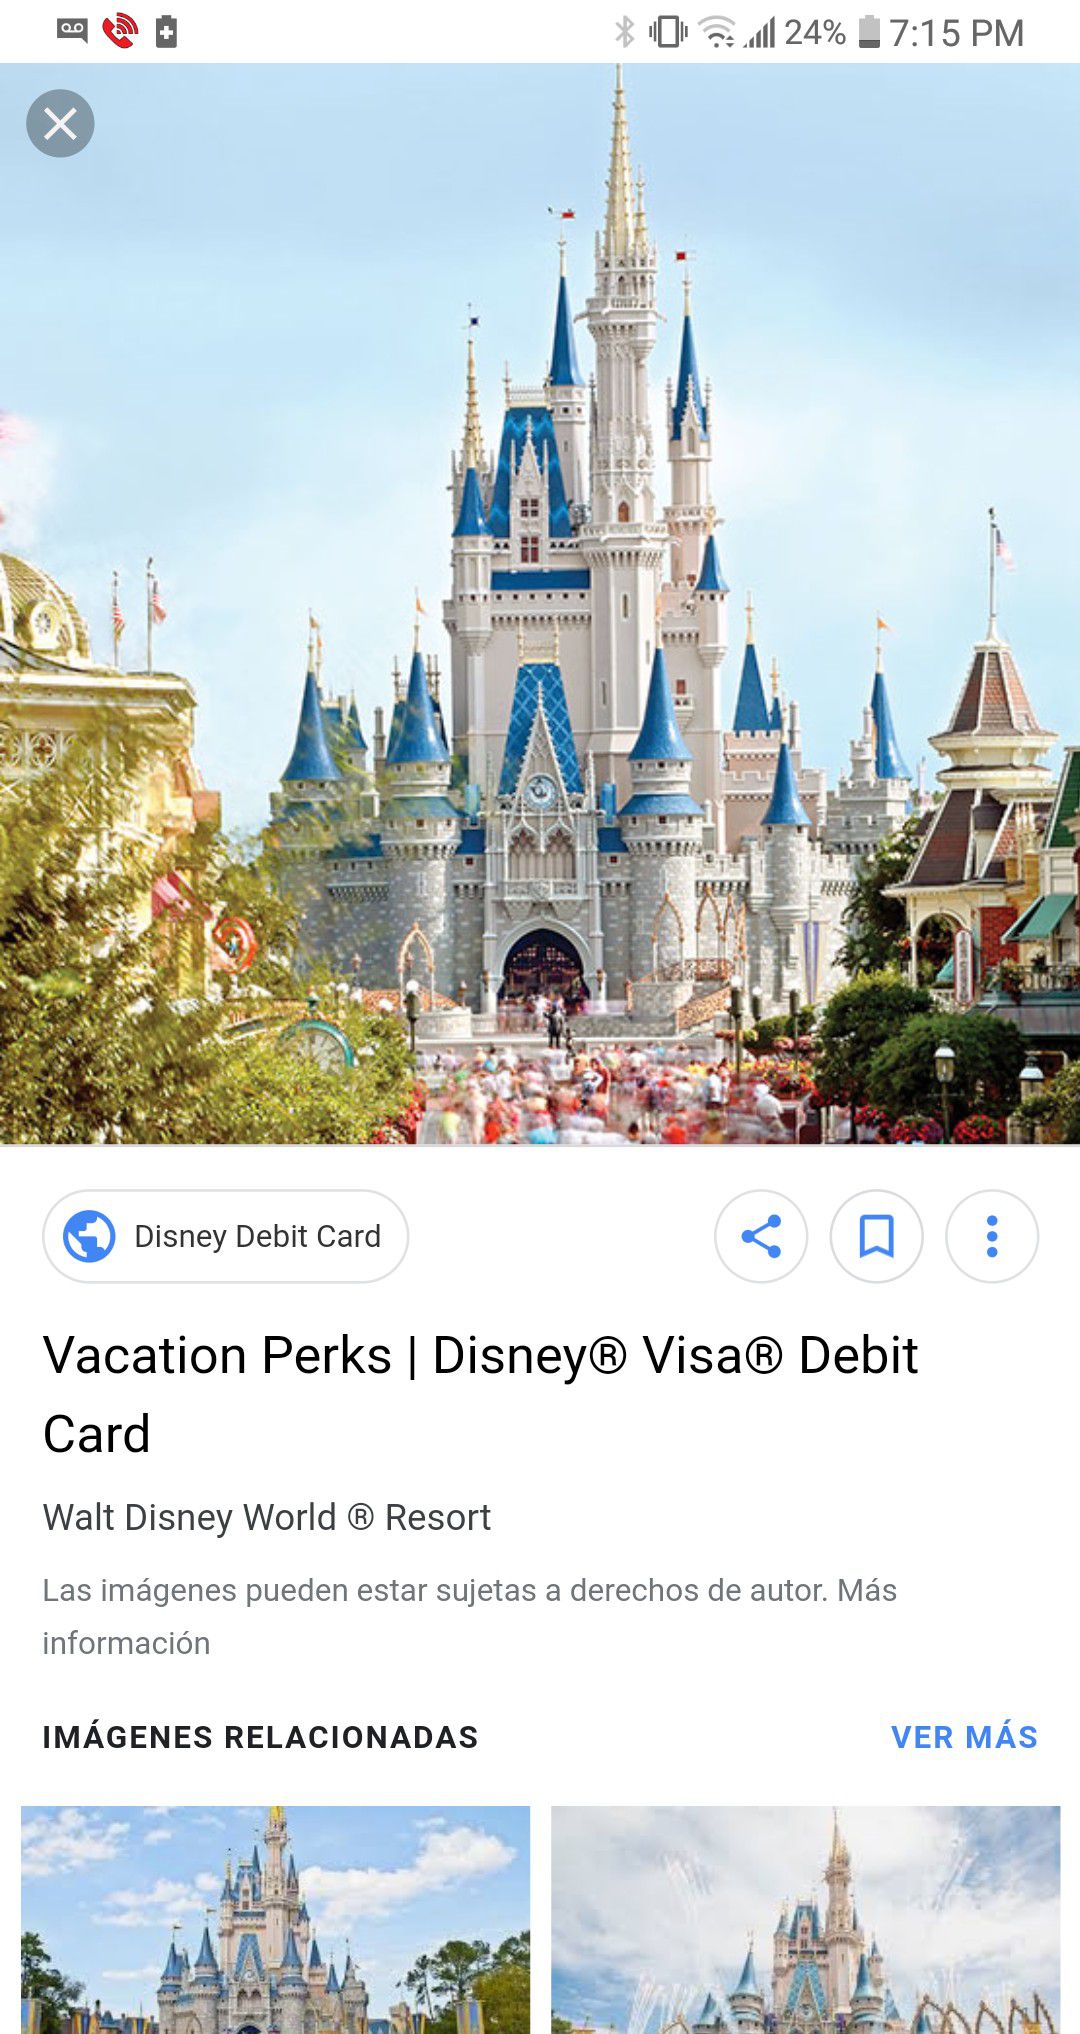 Disney ticket